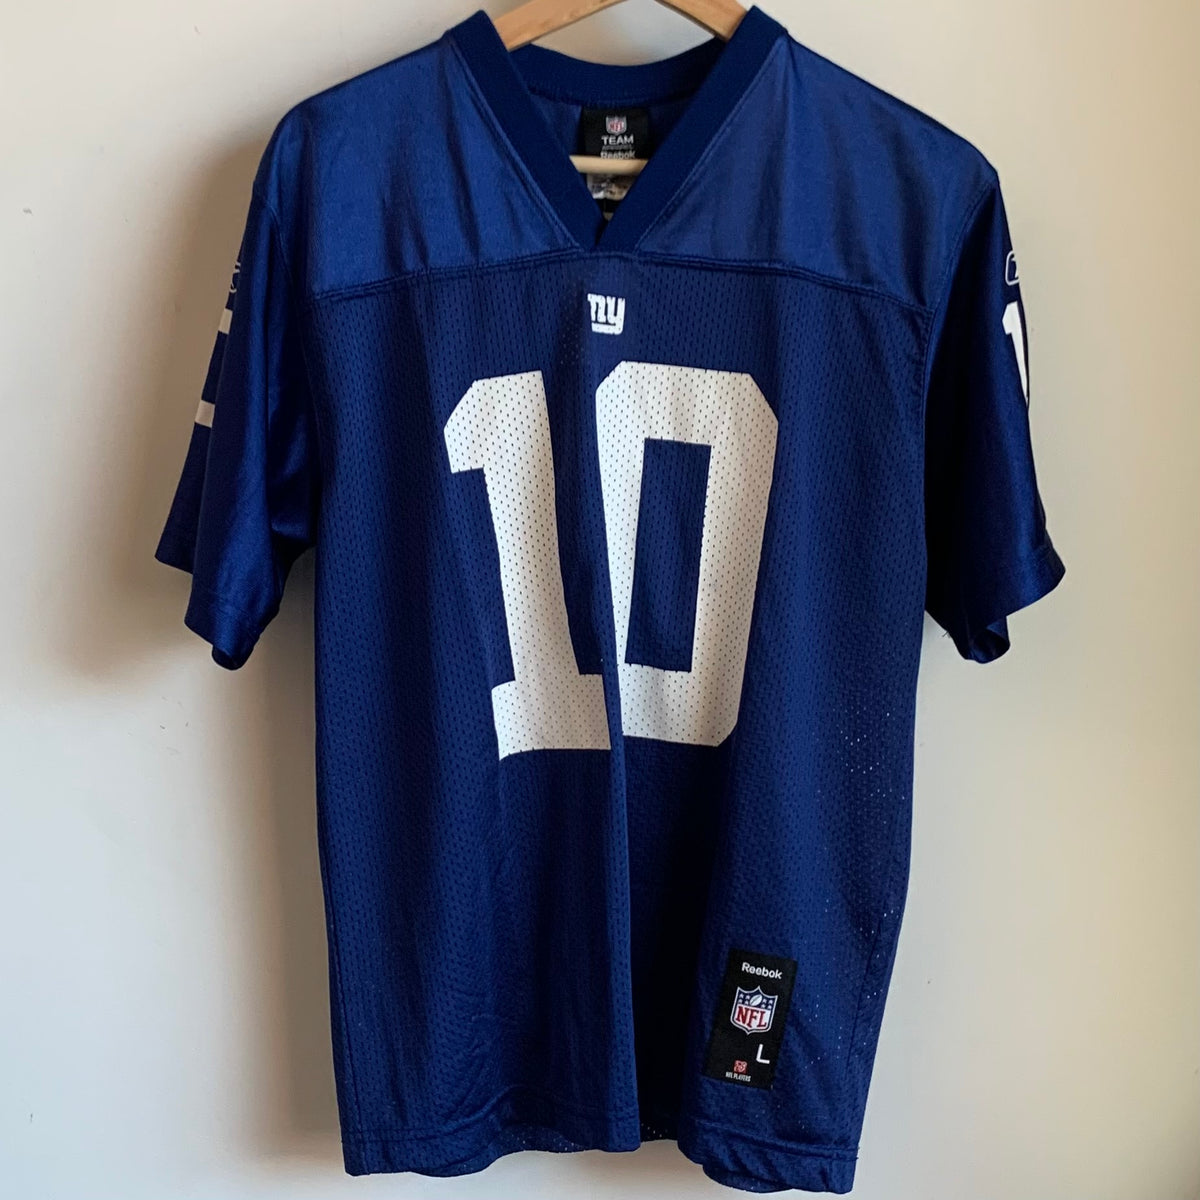 Eli Manning Jerseys, Eli Manning Shirt, Eli Manning Gear & Merchandise